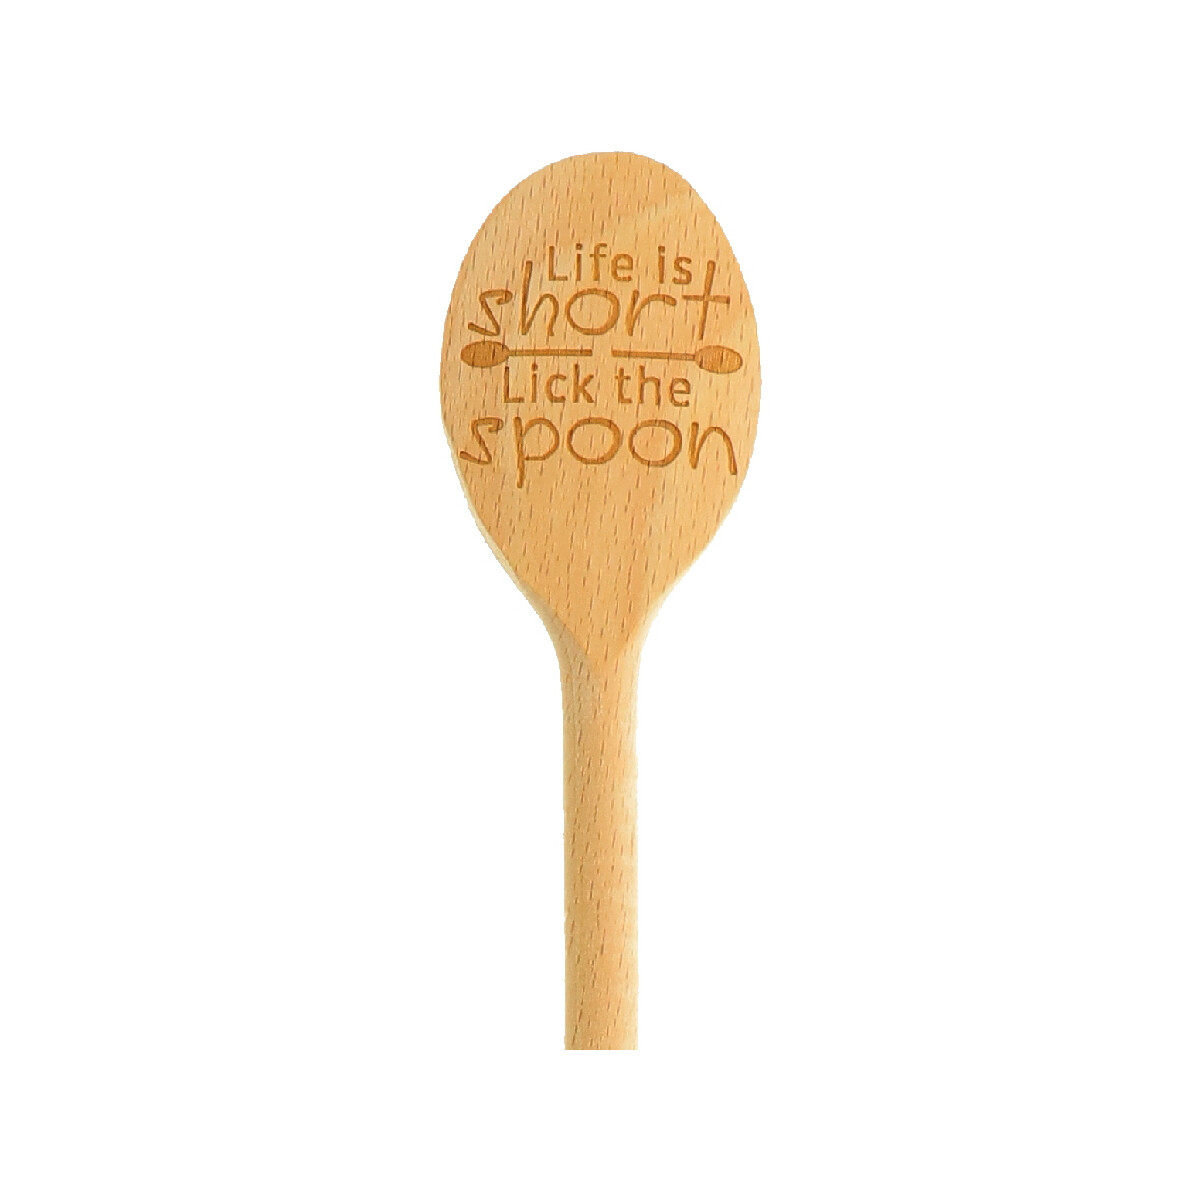 Kochlöffel, oval mit Spruch Life is short-lick the spoon" aus Holz 30 cm"